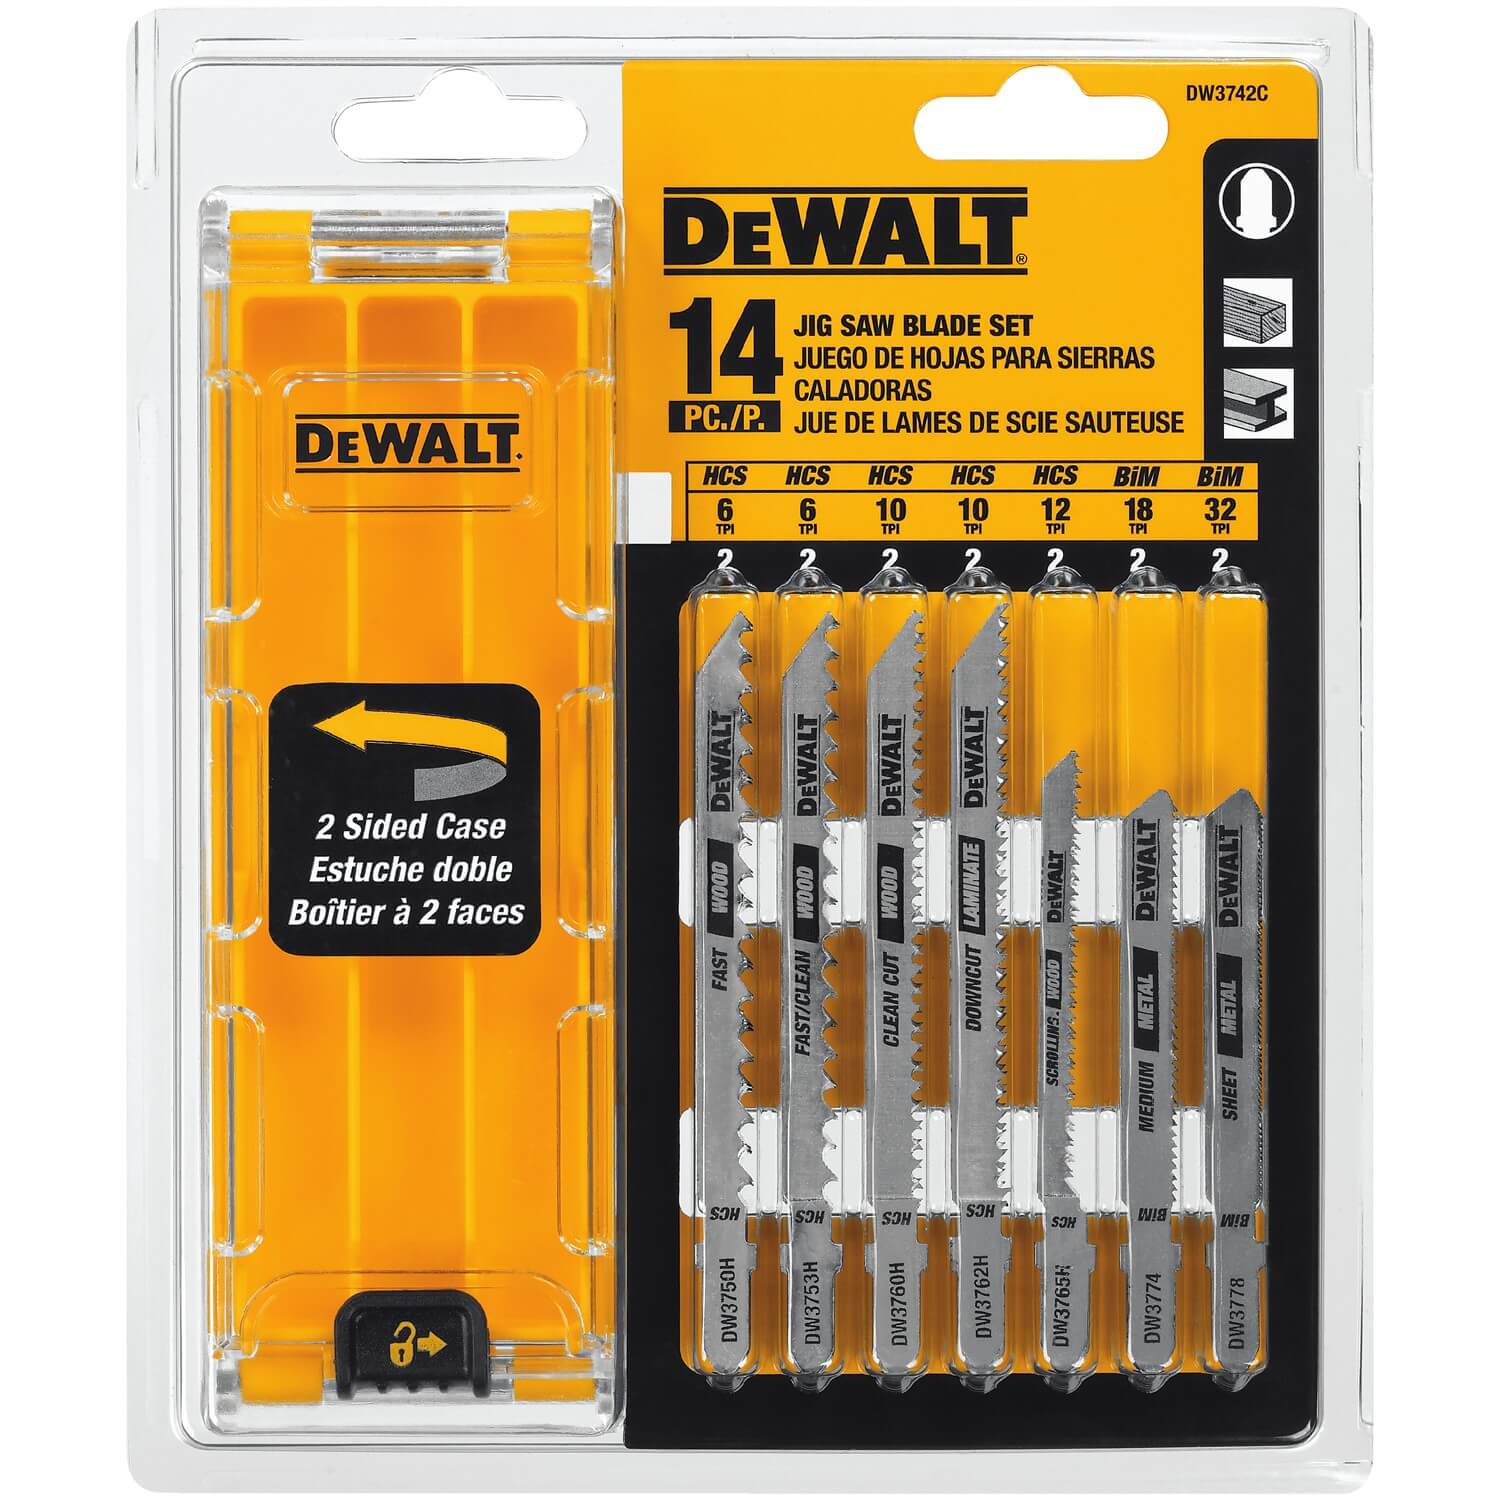 DEWALT DW3742C - 14 Piece Jig Saw Blade Set - wise-line-tools